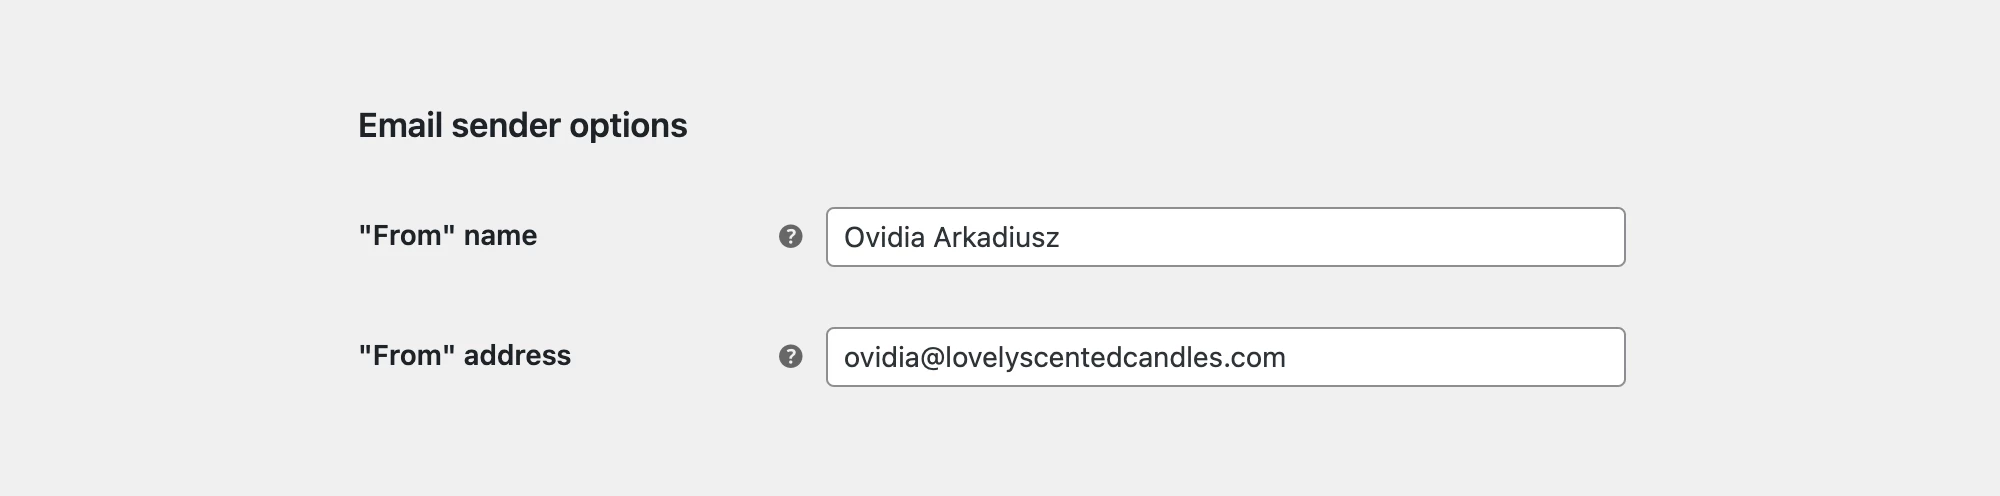 Email sender options